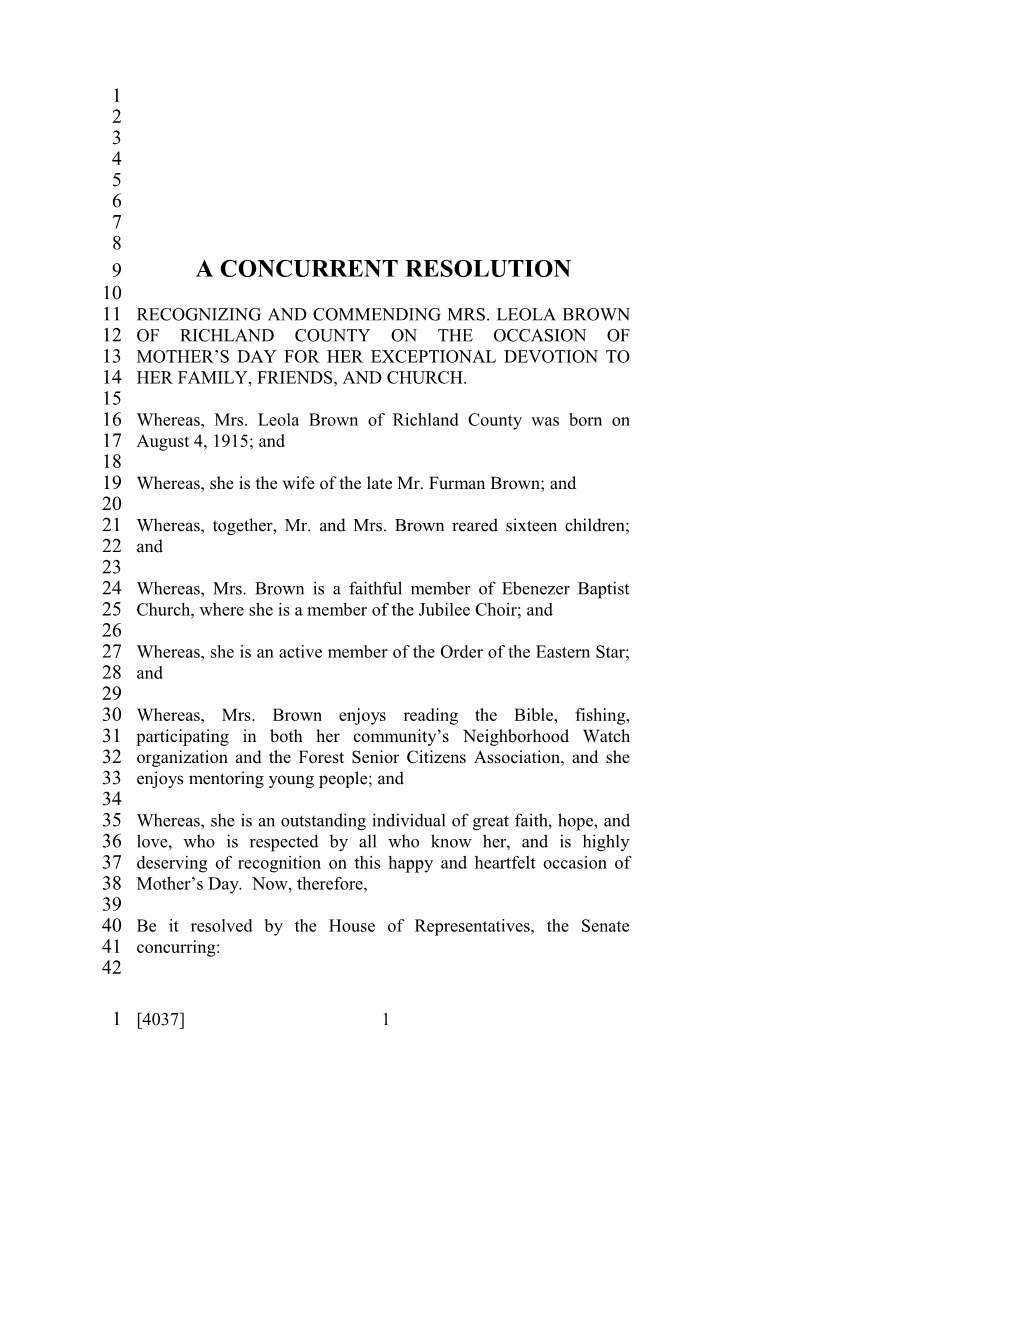 1999-2000 Bill 4037: Mrs. Leola Brown, Resolutions - South Carolina Legislature Online